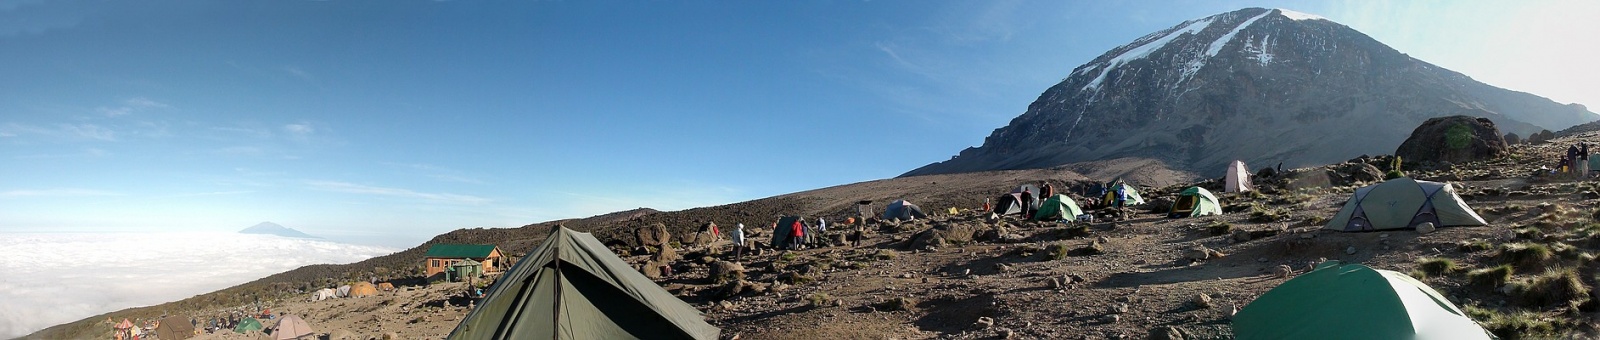 Im Karanga Camp (3.925 m.a.S.L.) mit Blick nach Nord-West zum Kibo - Juni 2014 - © Jens Teichmann [1]